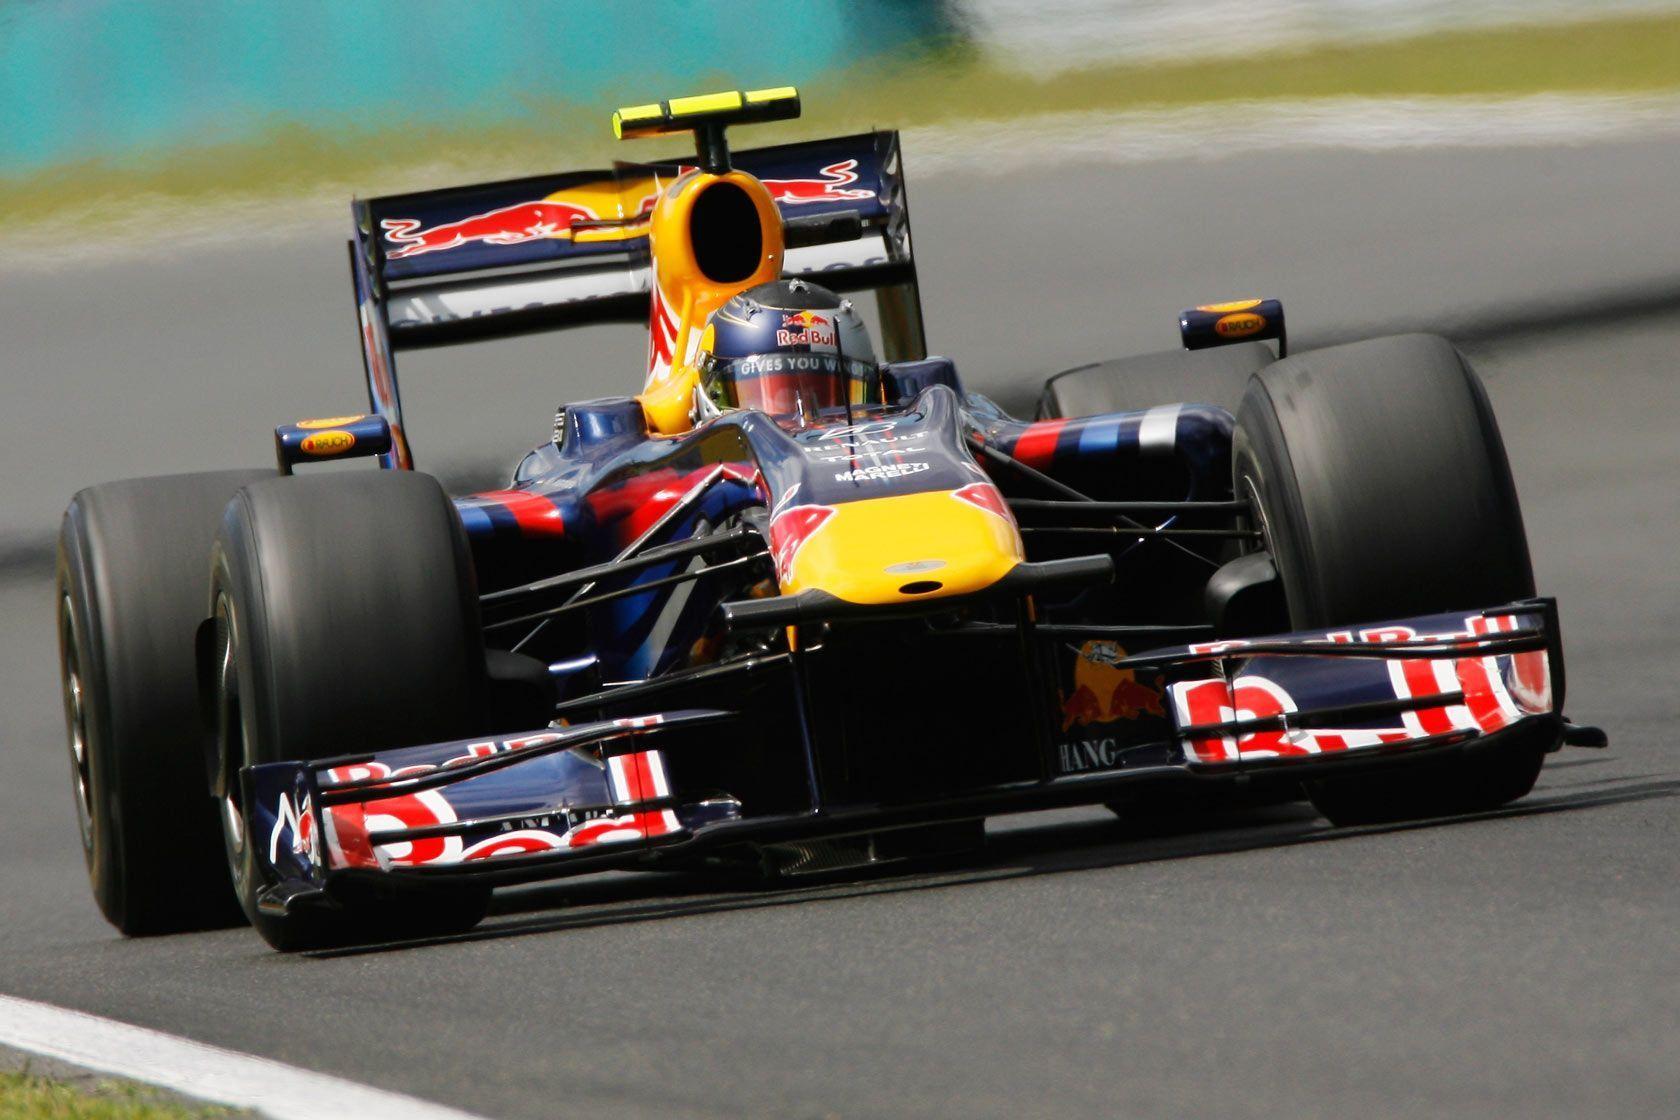 Hungarian Grand Prix in picture